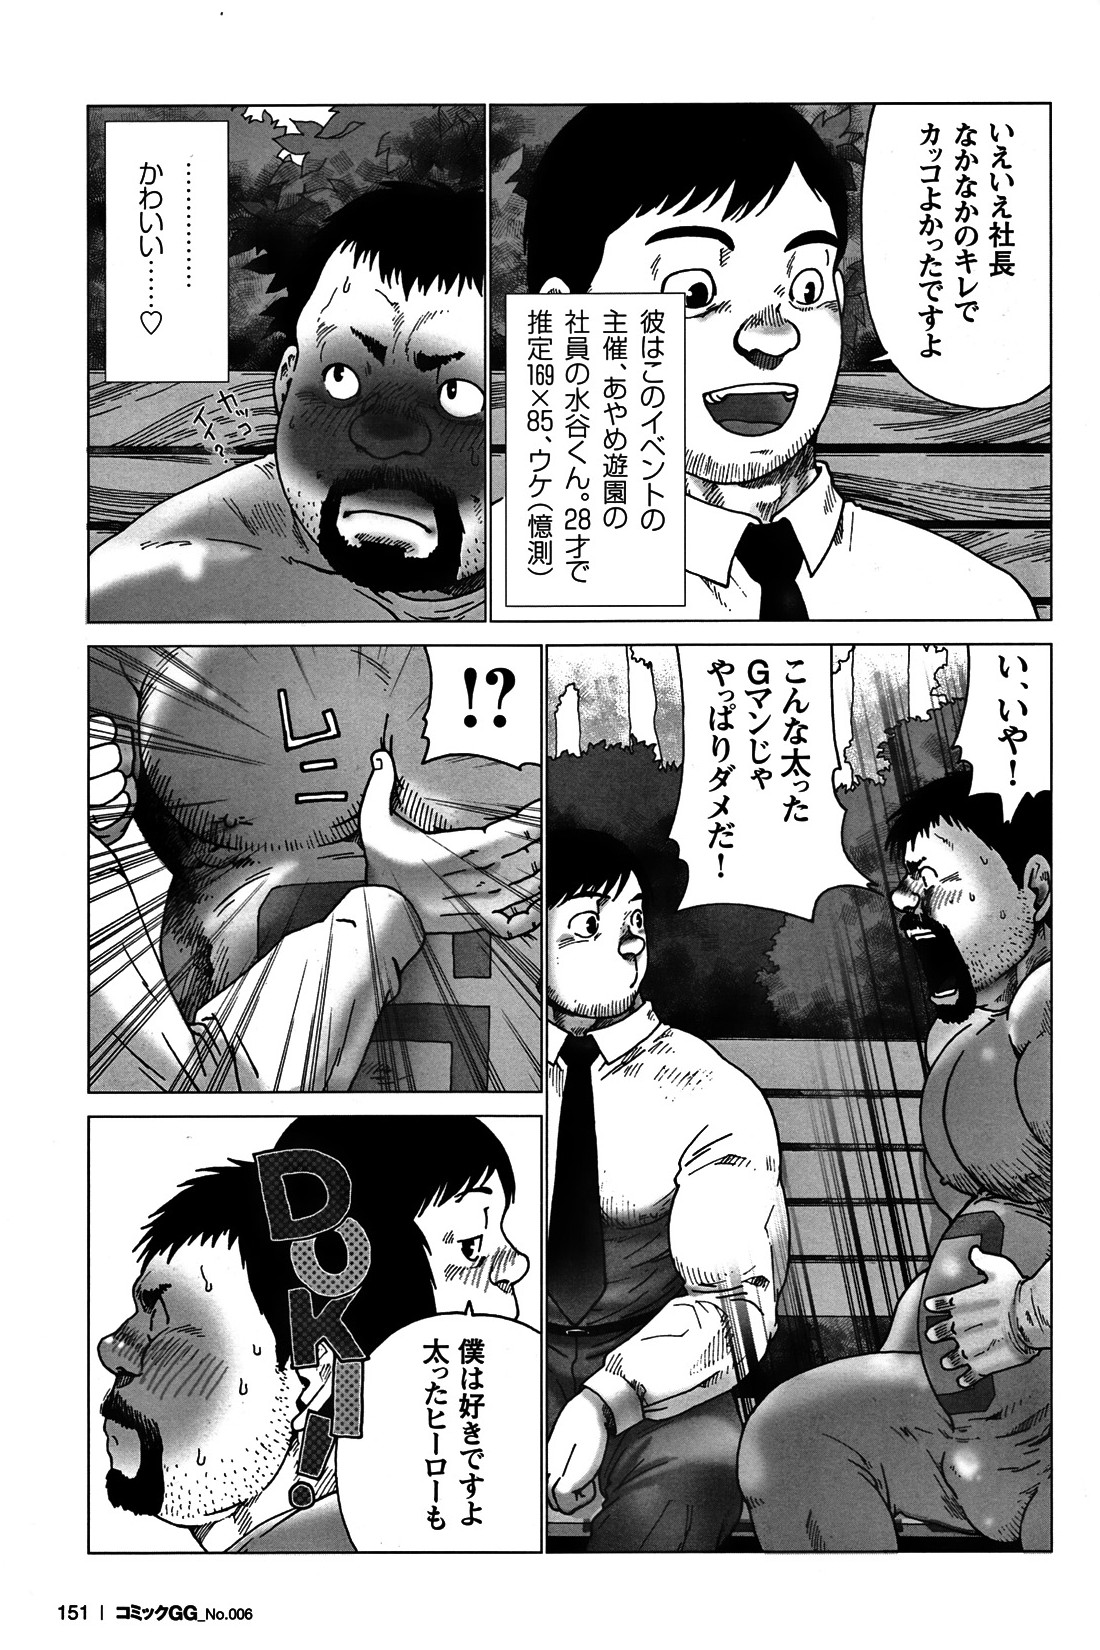 Comic G-men Gaho No. 06 Nikutai Roudousha コミックG.G. No.06 肉体労働者